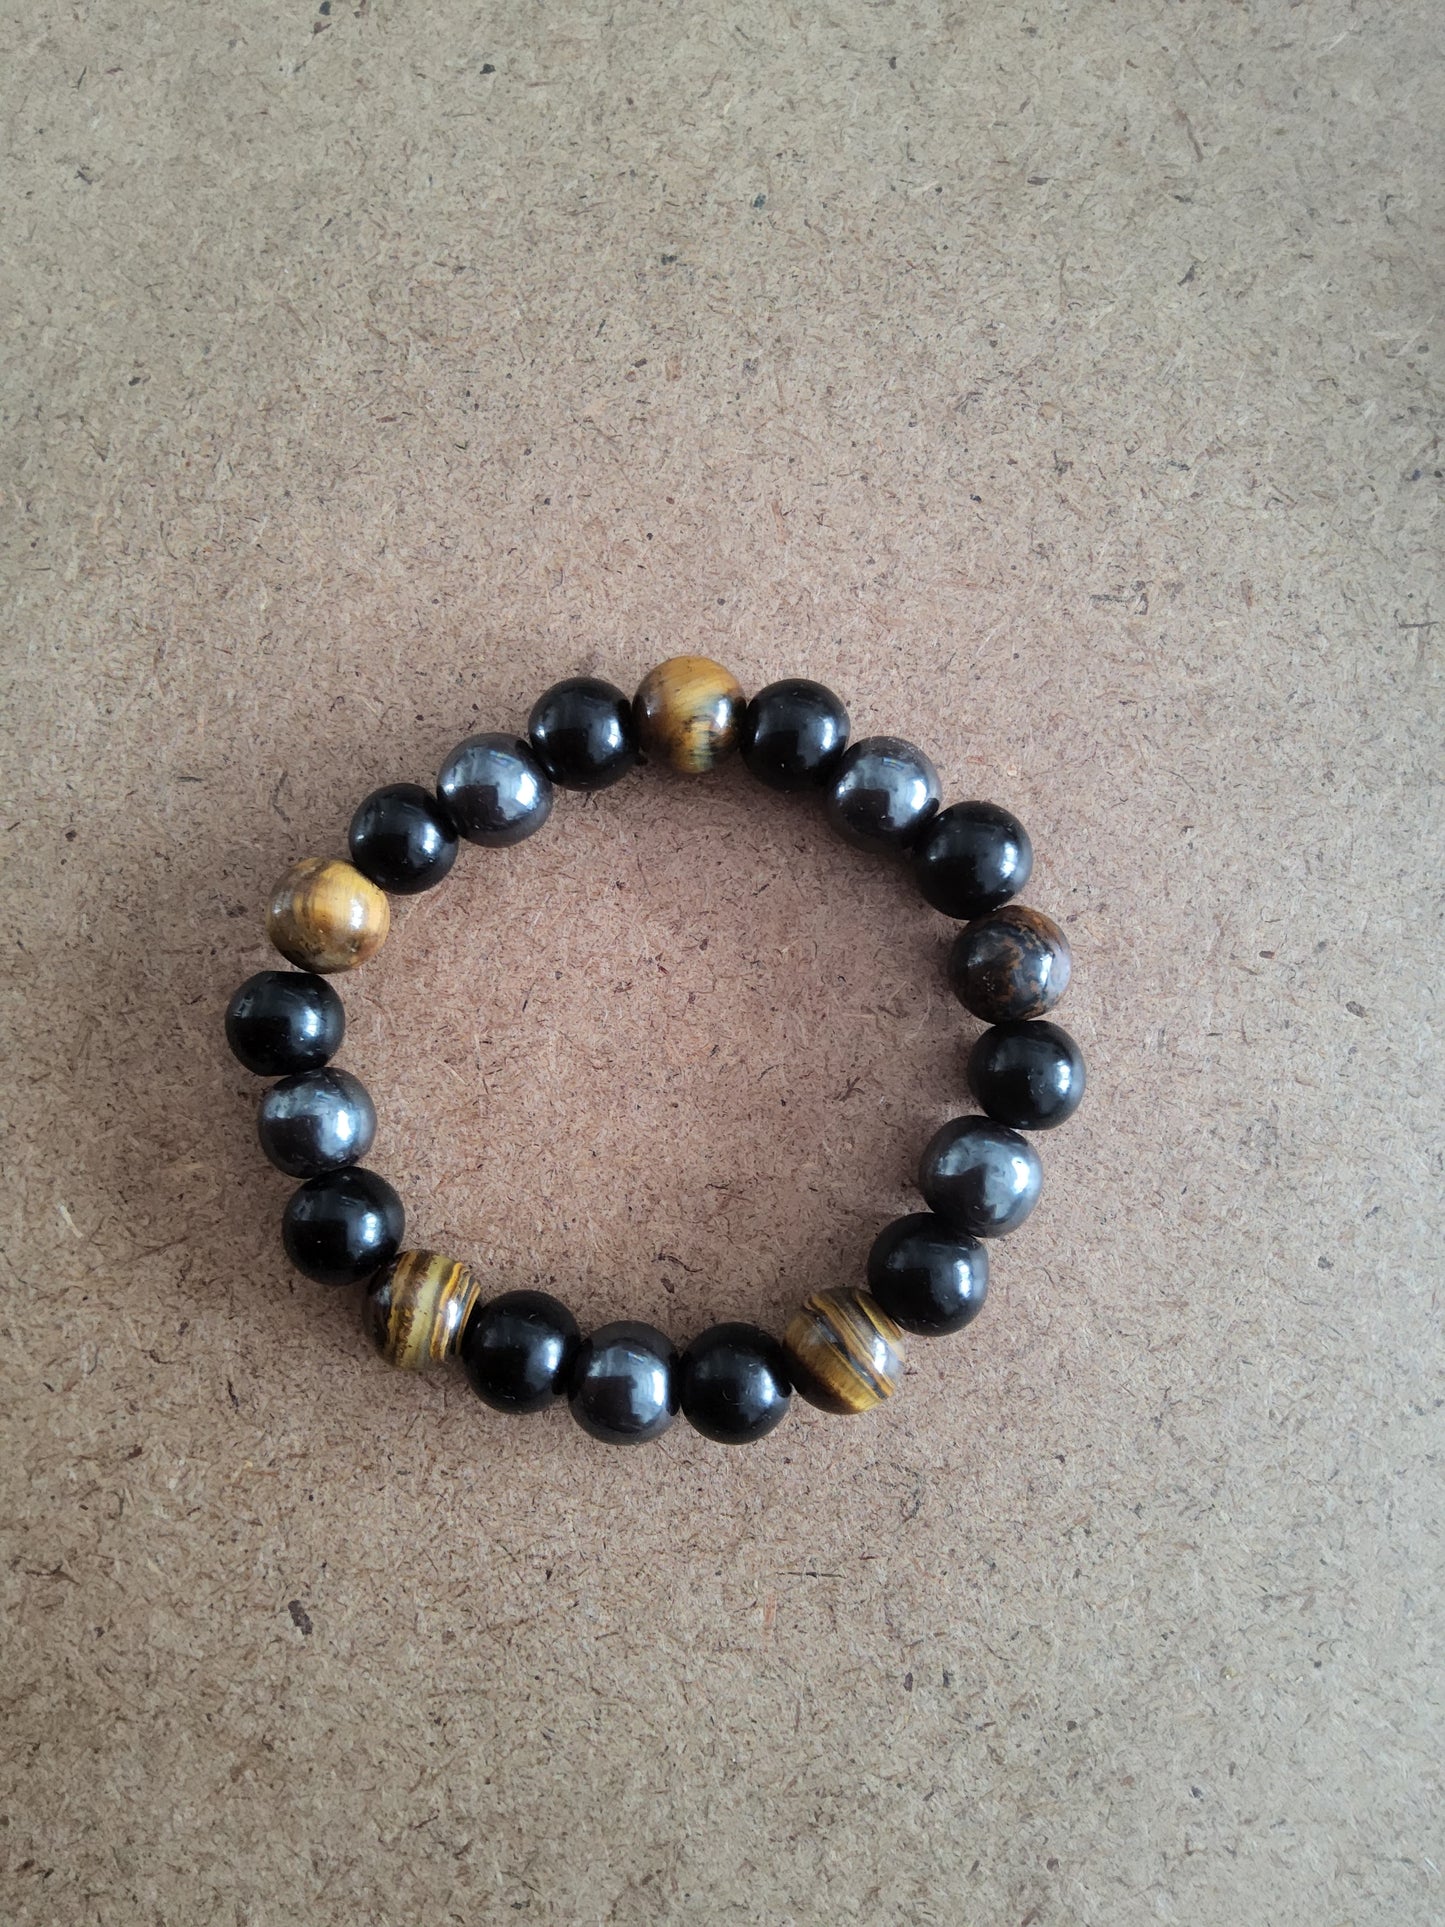 Handmade Triple Protection Bracelet, Tiger Eye, Black Obsidian and Hematite crystal stones